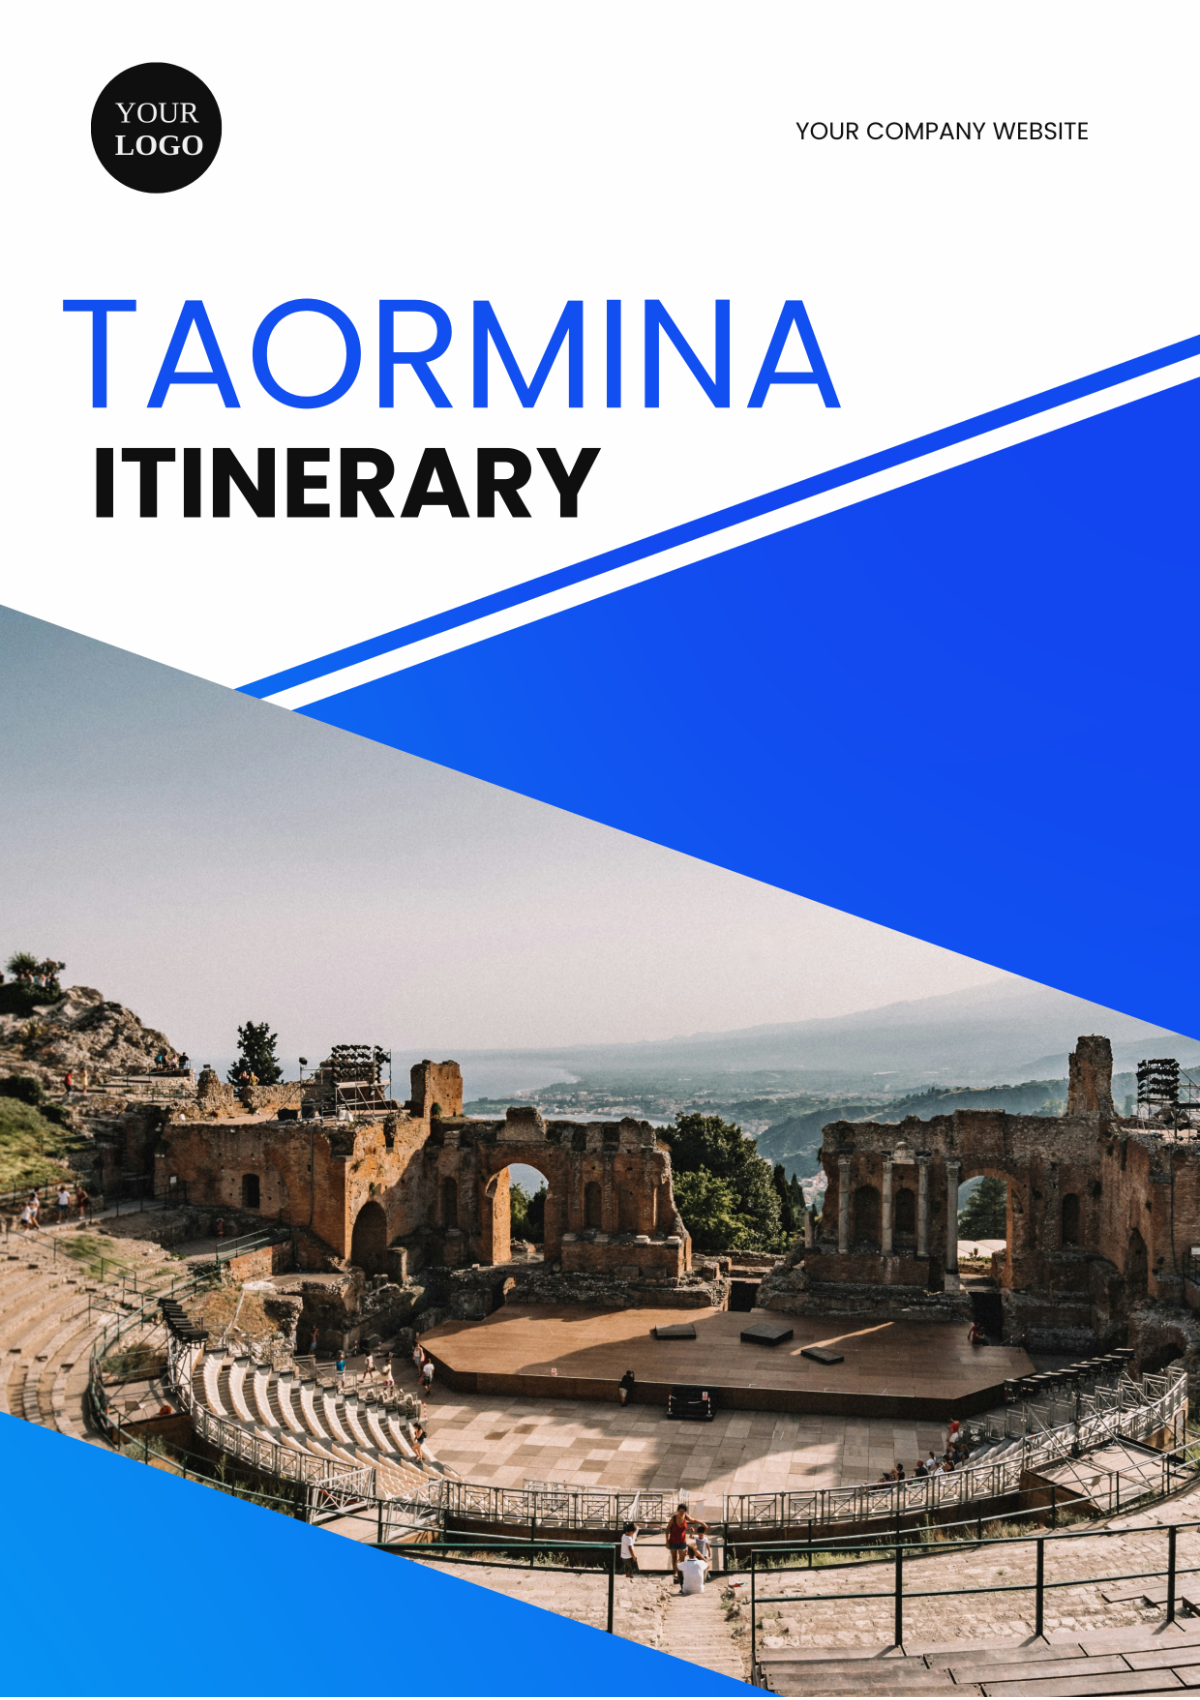 Taormina Itinerary Template